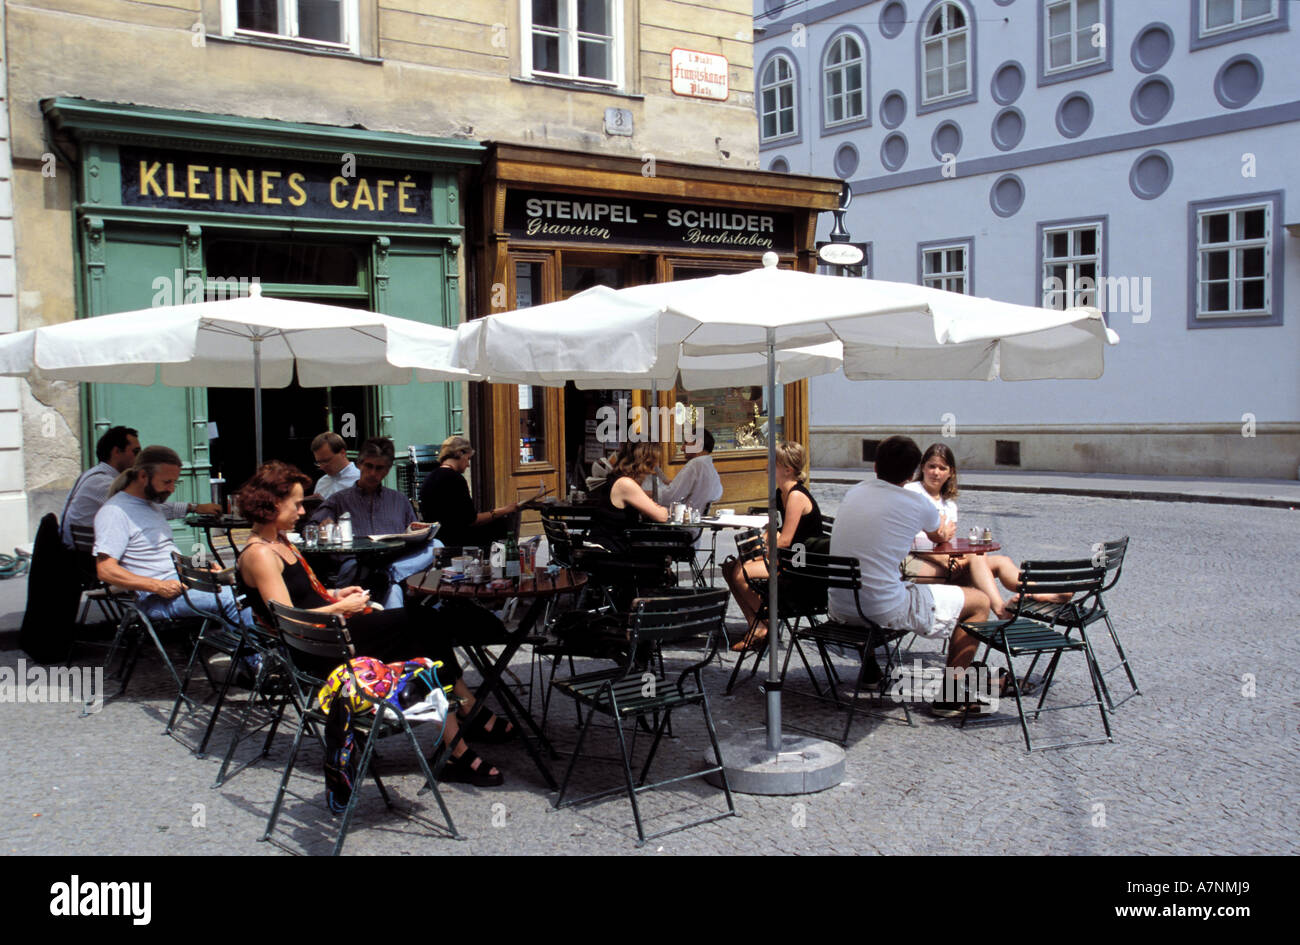 Austria, Vienna, the Kleines Cafe Stock Photo